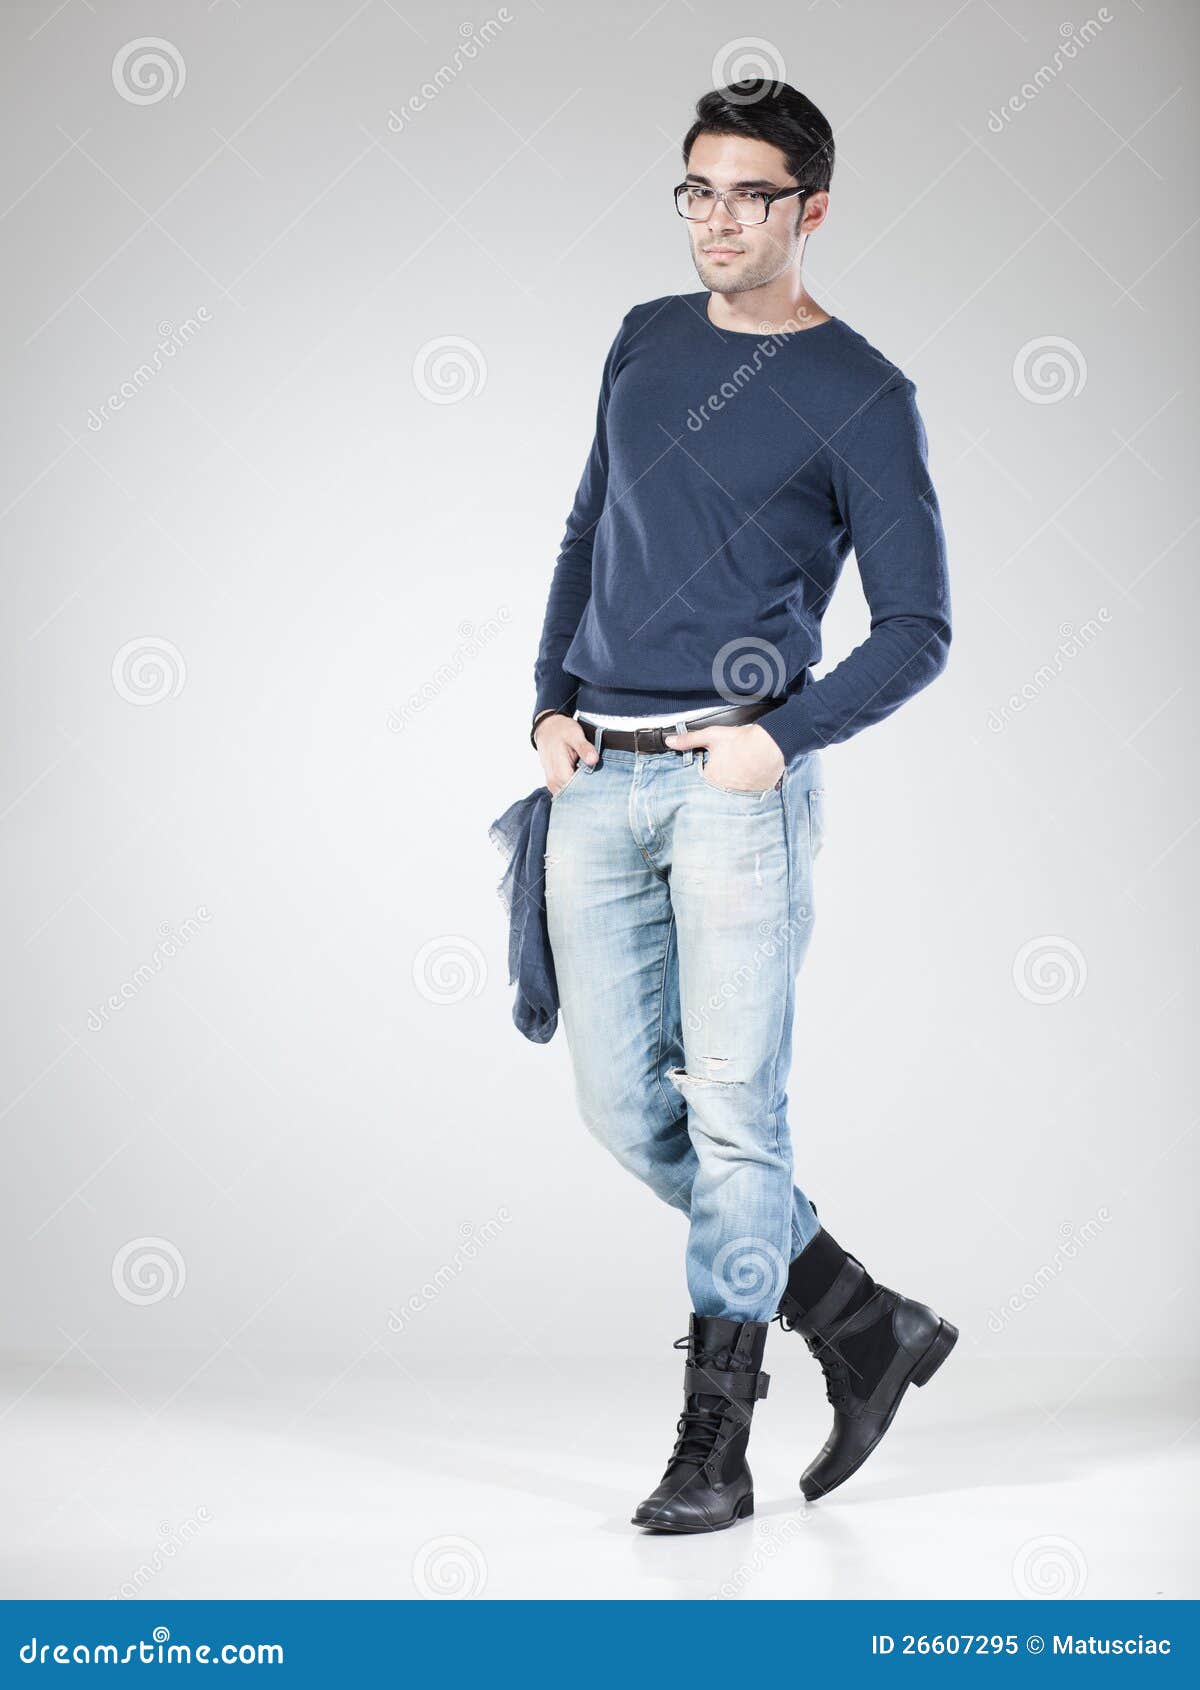 Male Model Perfect Body Jeans Posing Stock Photo 1410935285 | Shutterstock